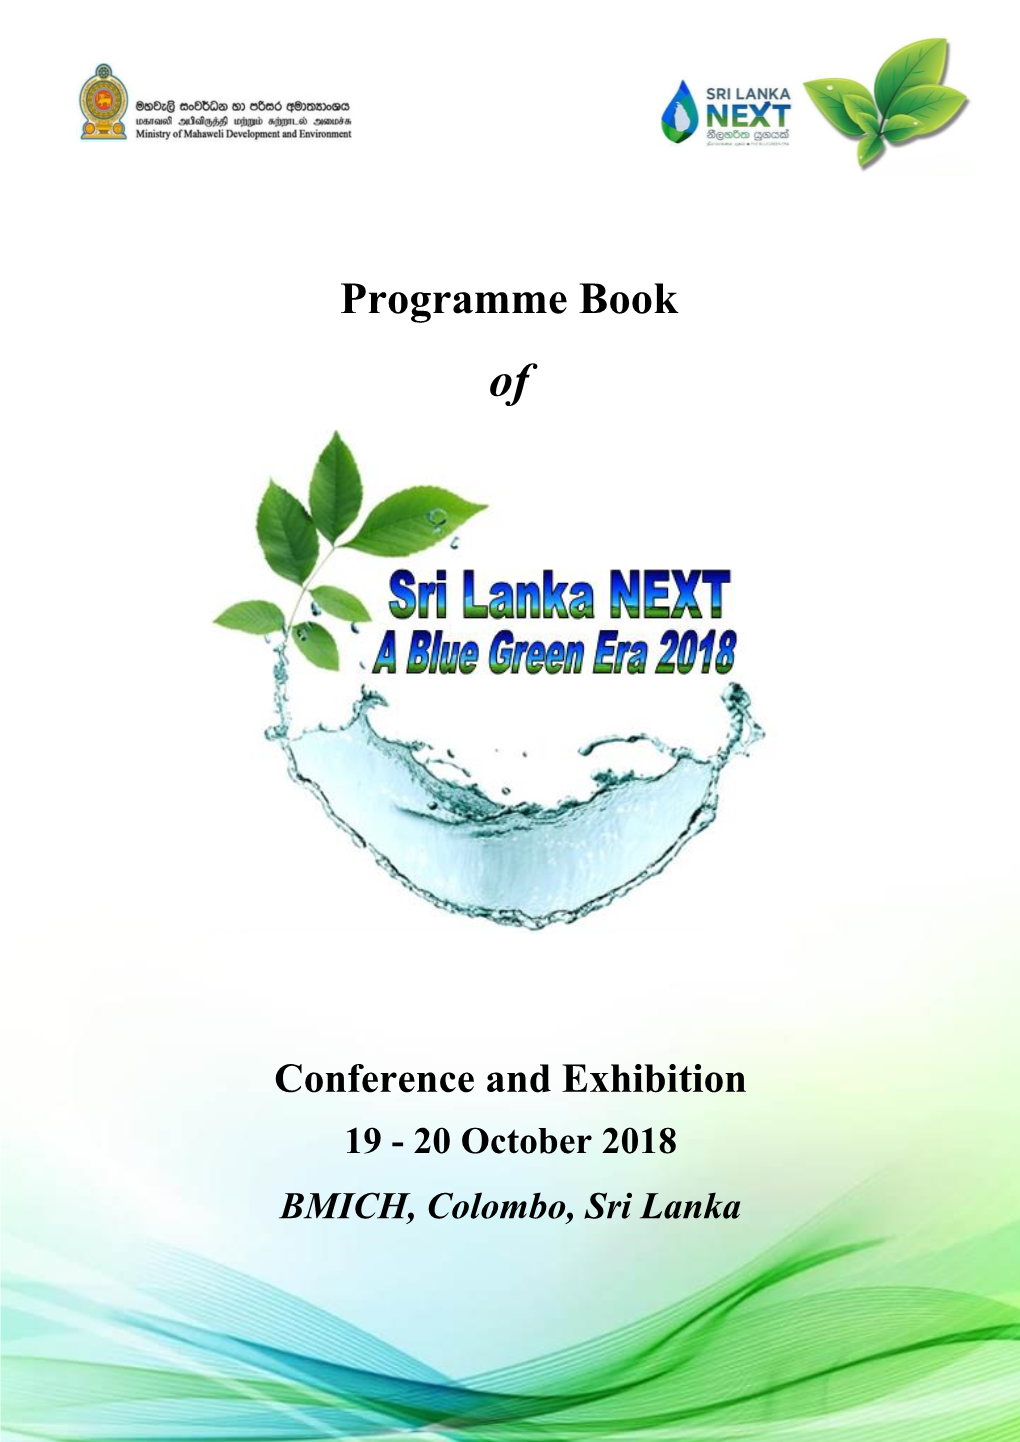 Programme Book of Sri Lanka Next